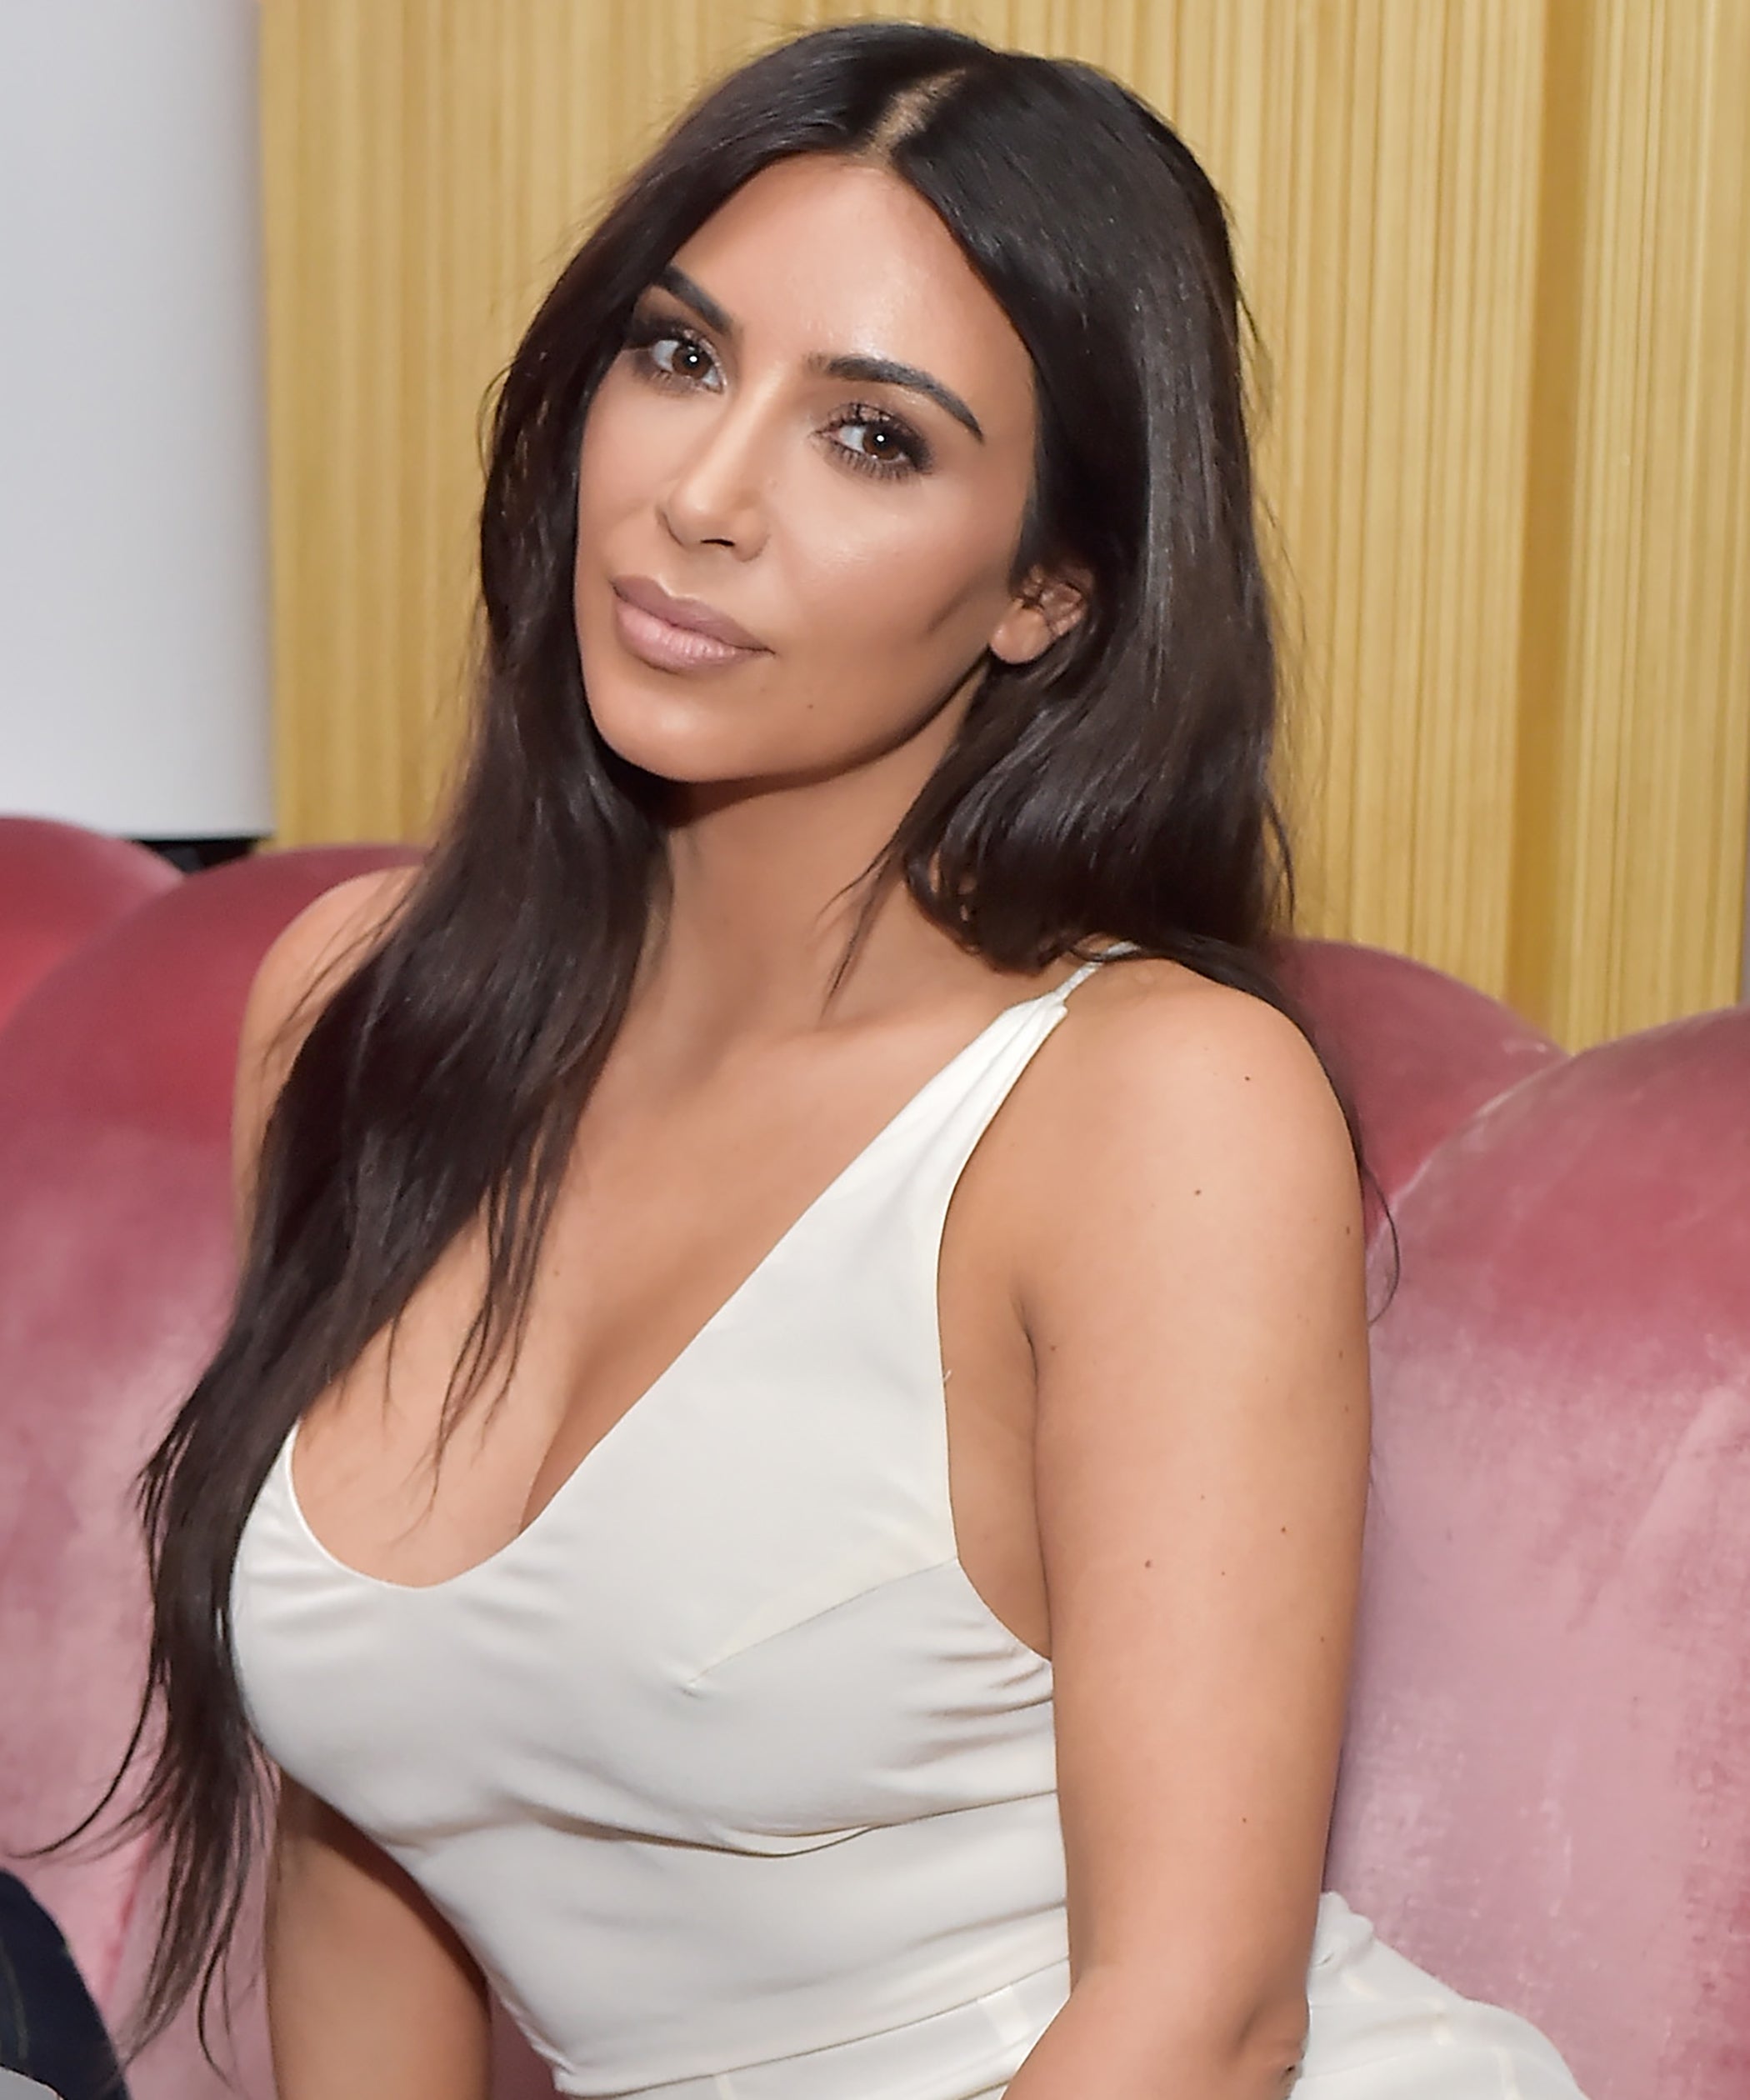 Kim Kardashian Reveals New Bright Red Hair On Instagram